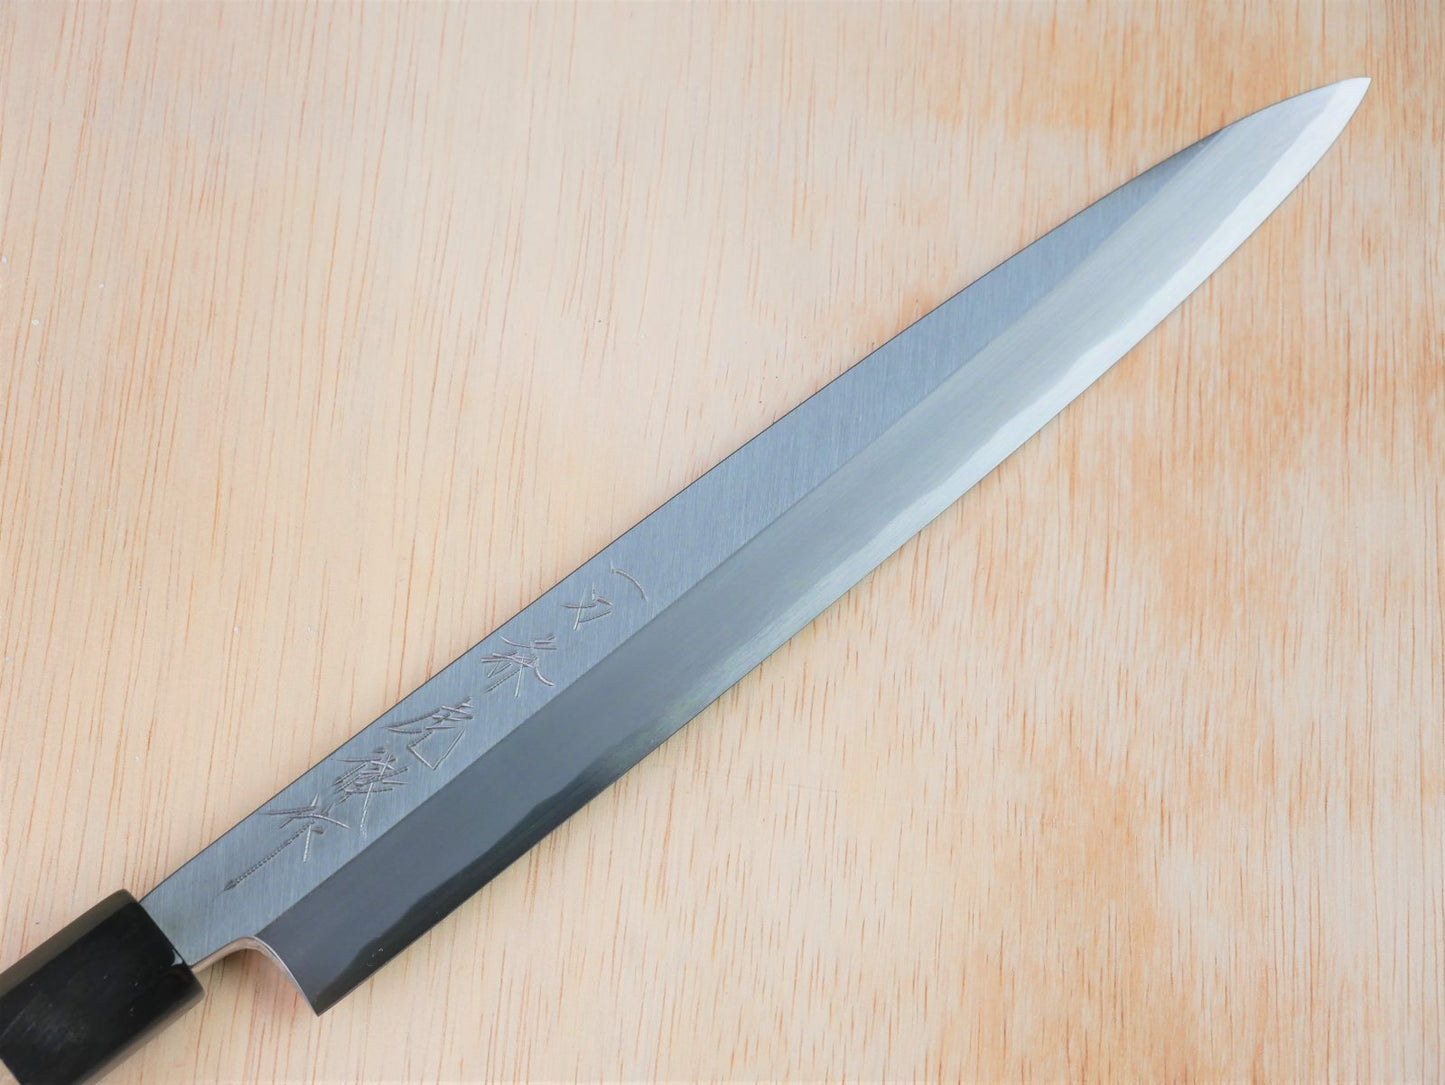 Blade of 240mm Sirogami No.3 Yanagiba made by Takahashikusu